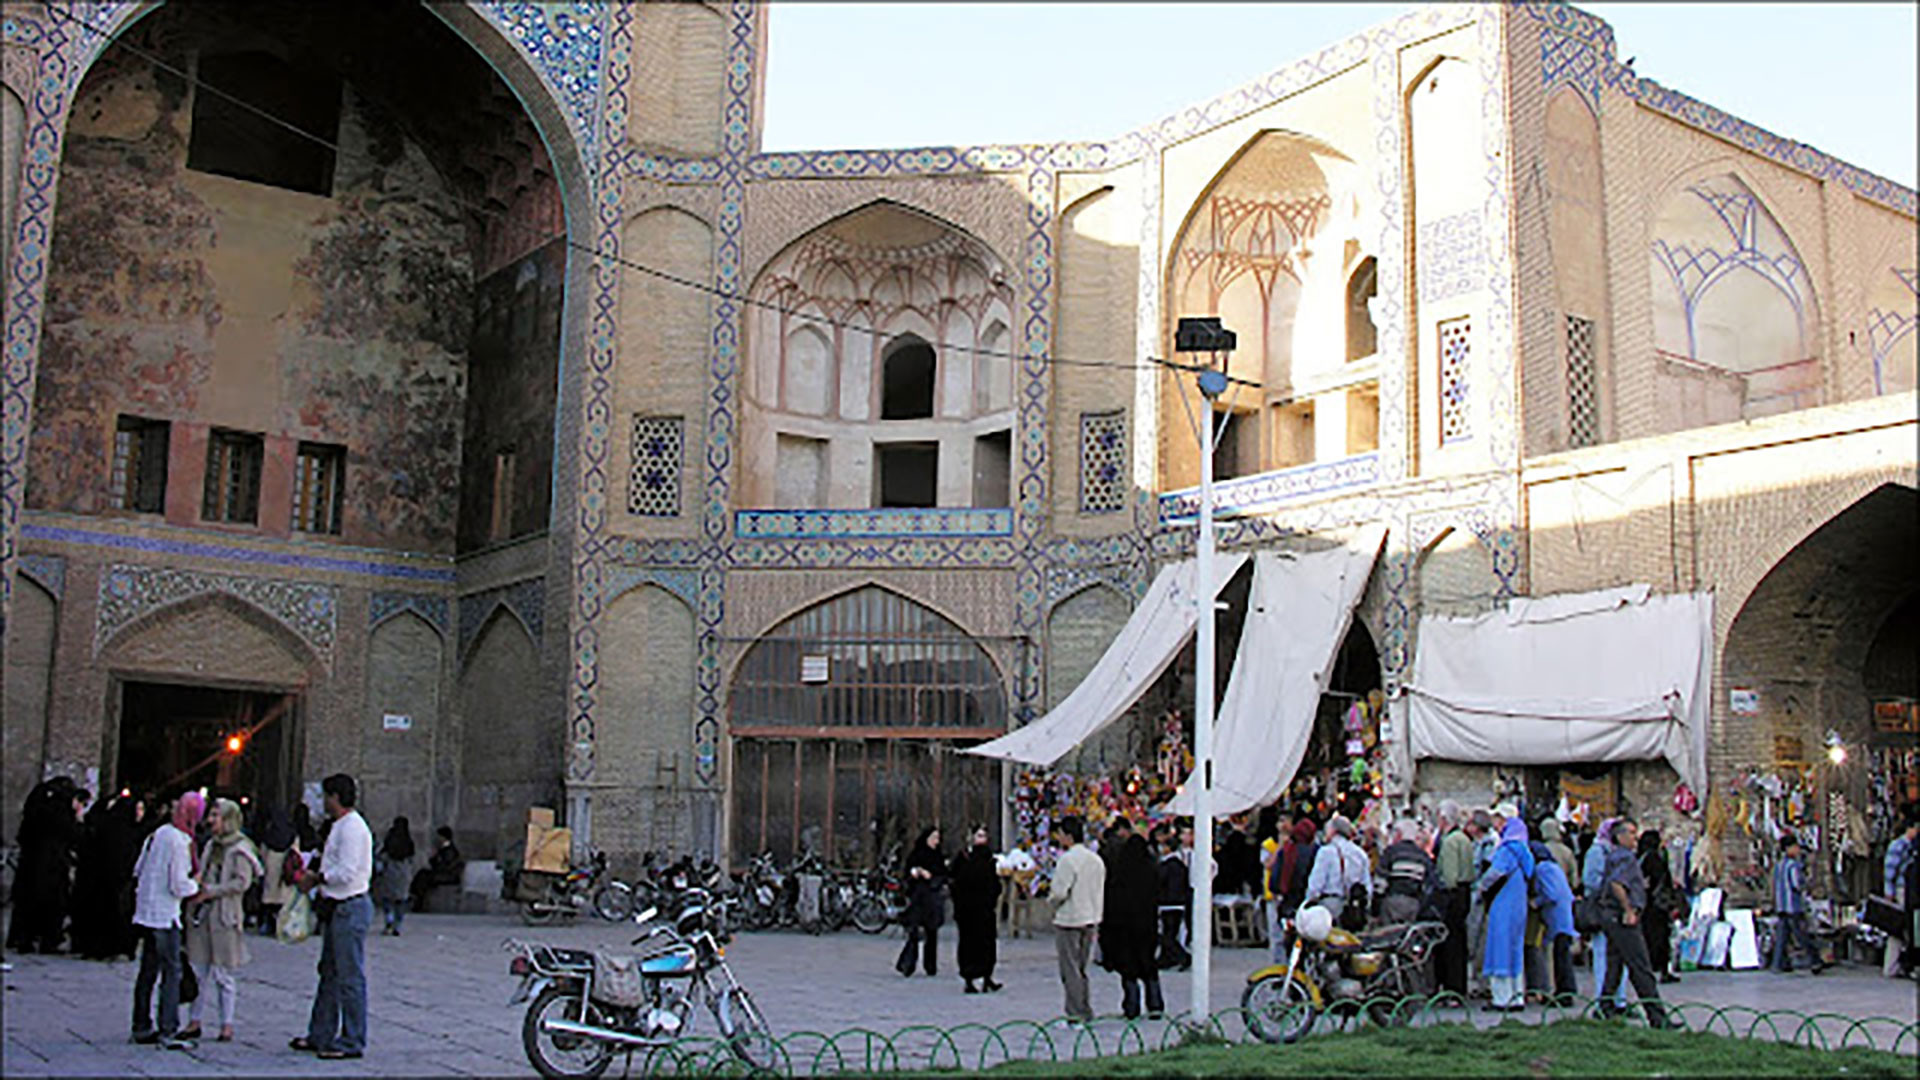 One of my favorite cities - is Esfahan, Iran